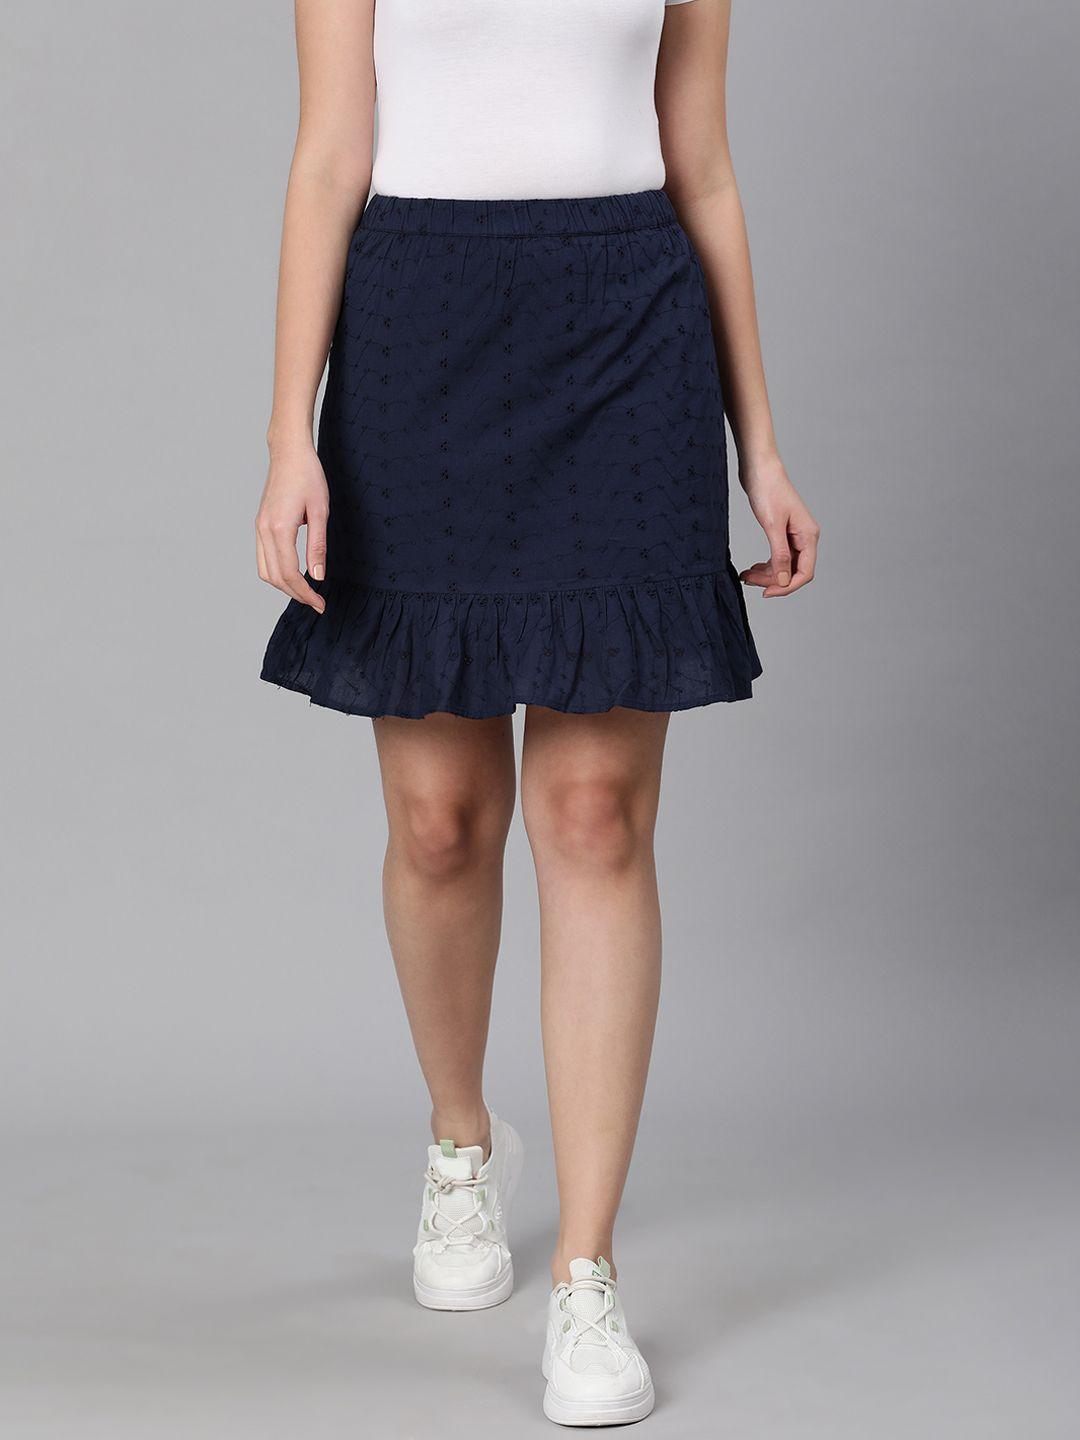 oxolloxo-women-navy-blue-schiffy-flared-skirt